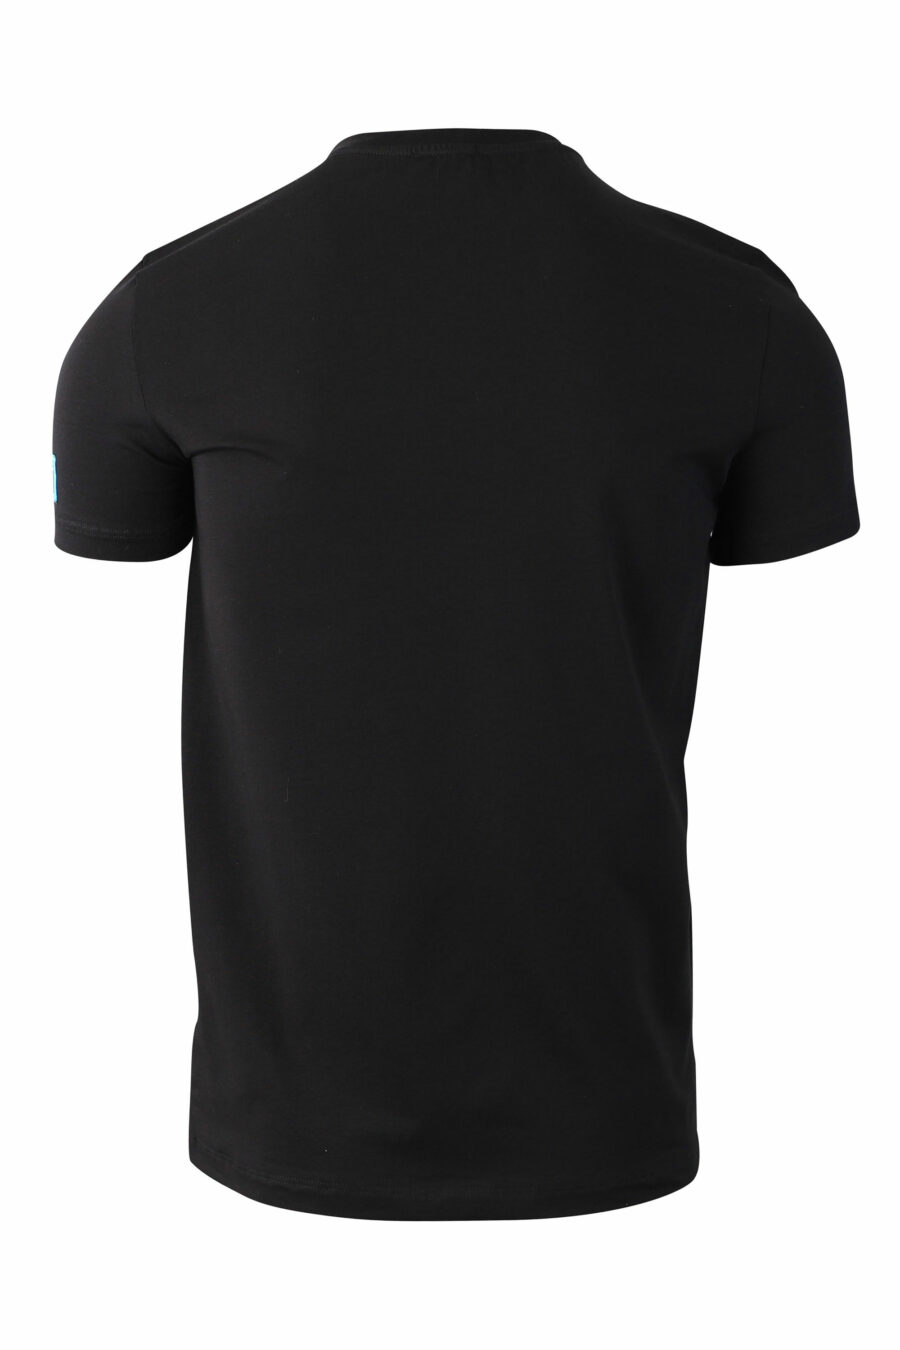 T-shirt noir avec mini-logo bleu "icon" sur la manche - IMG 0037 1